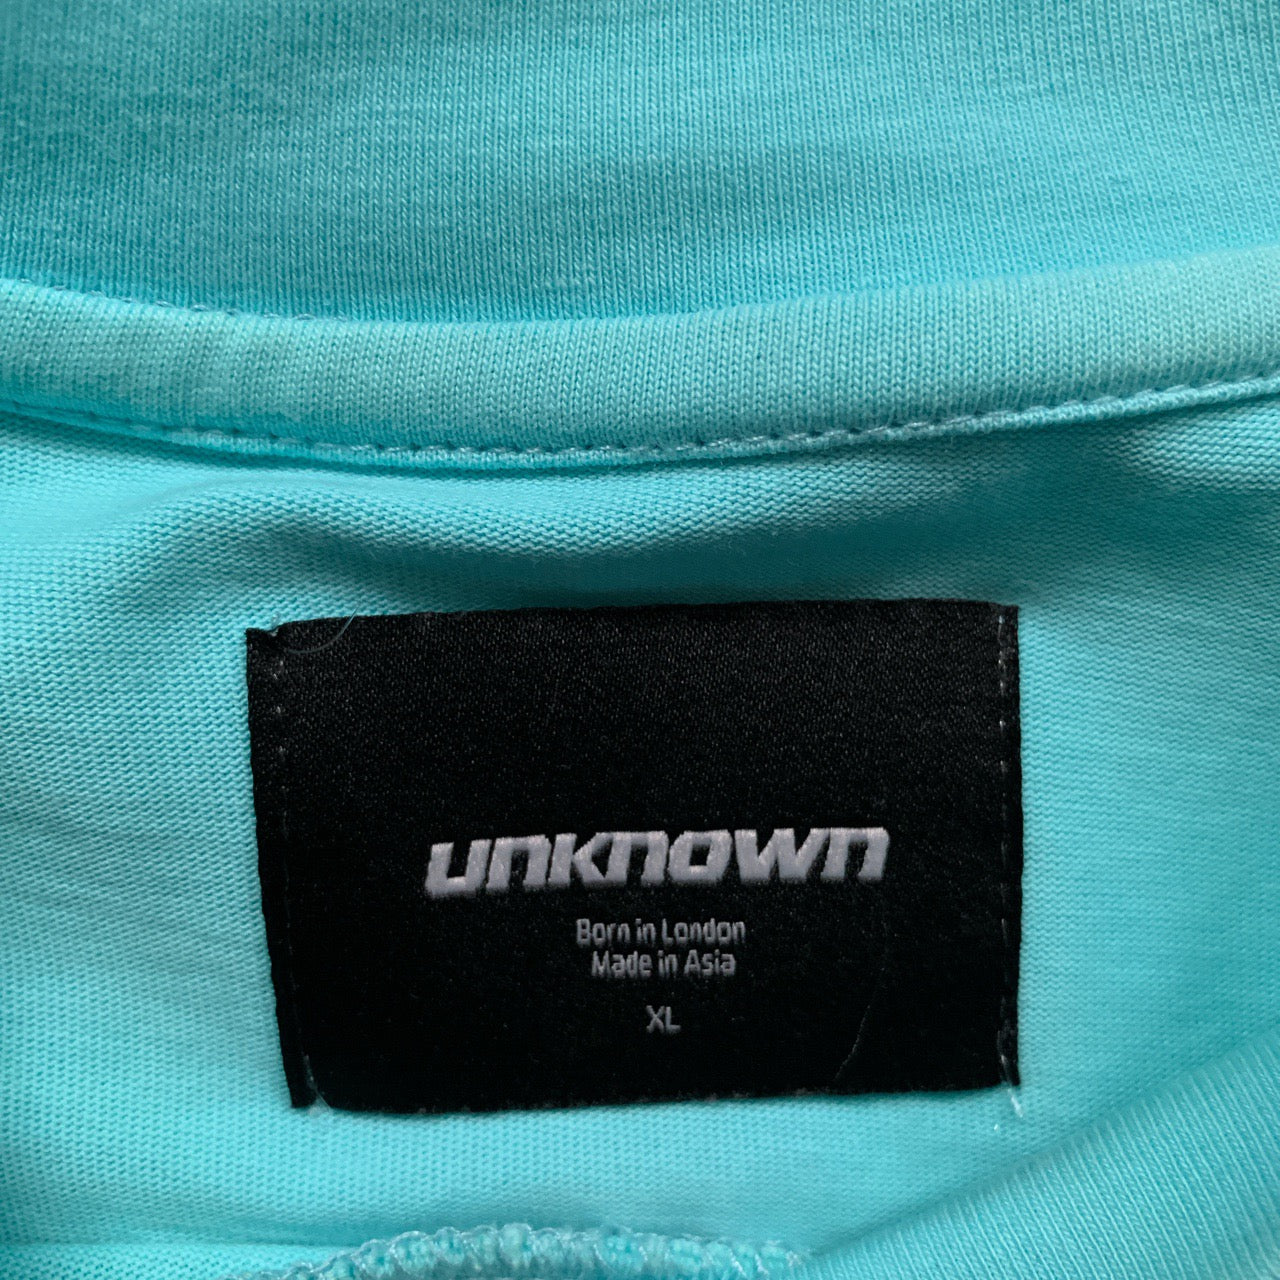 Unknown London Light Blue T Shirt (XL)